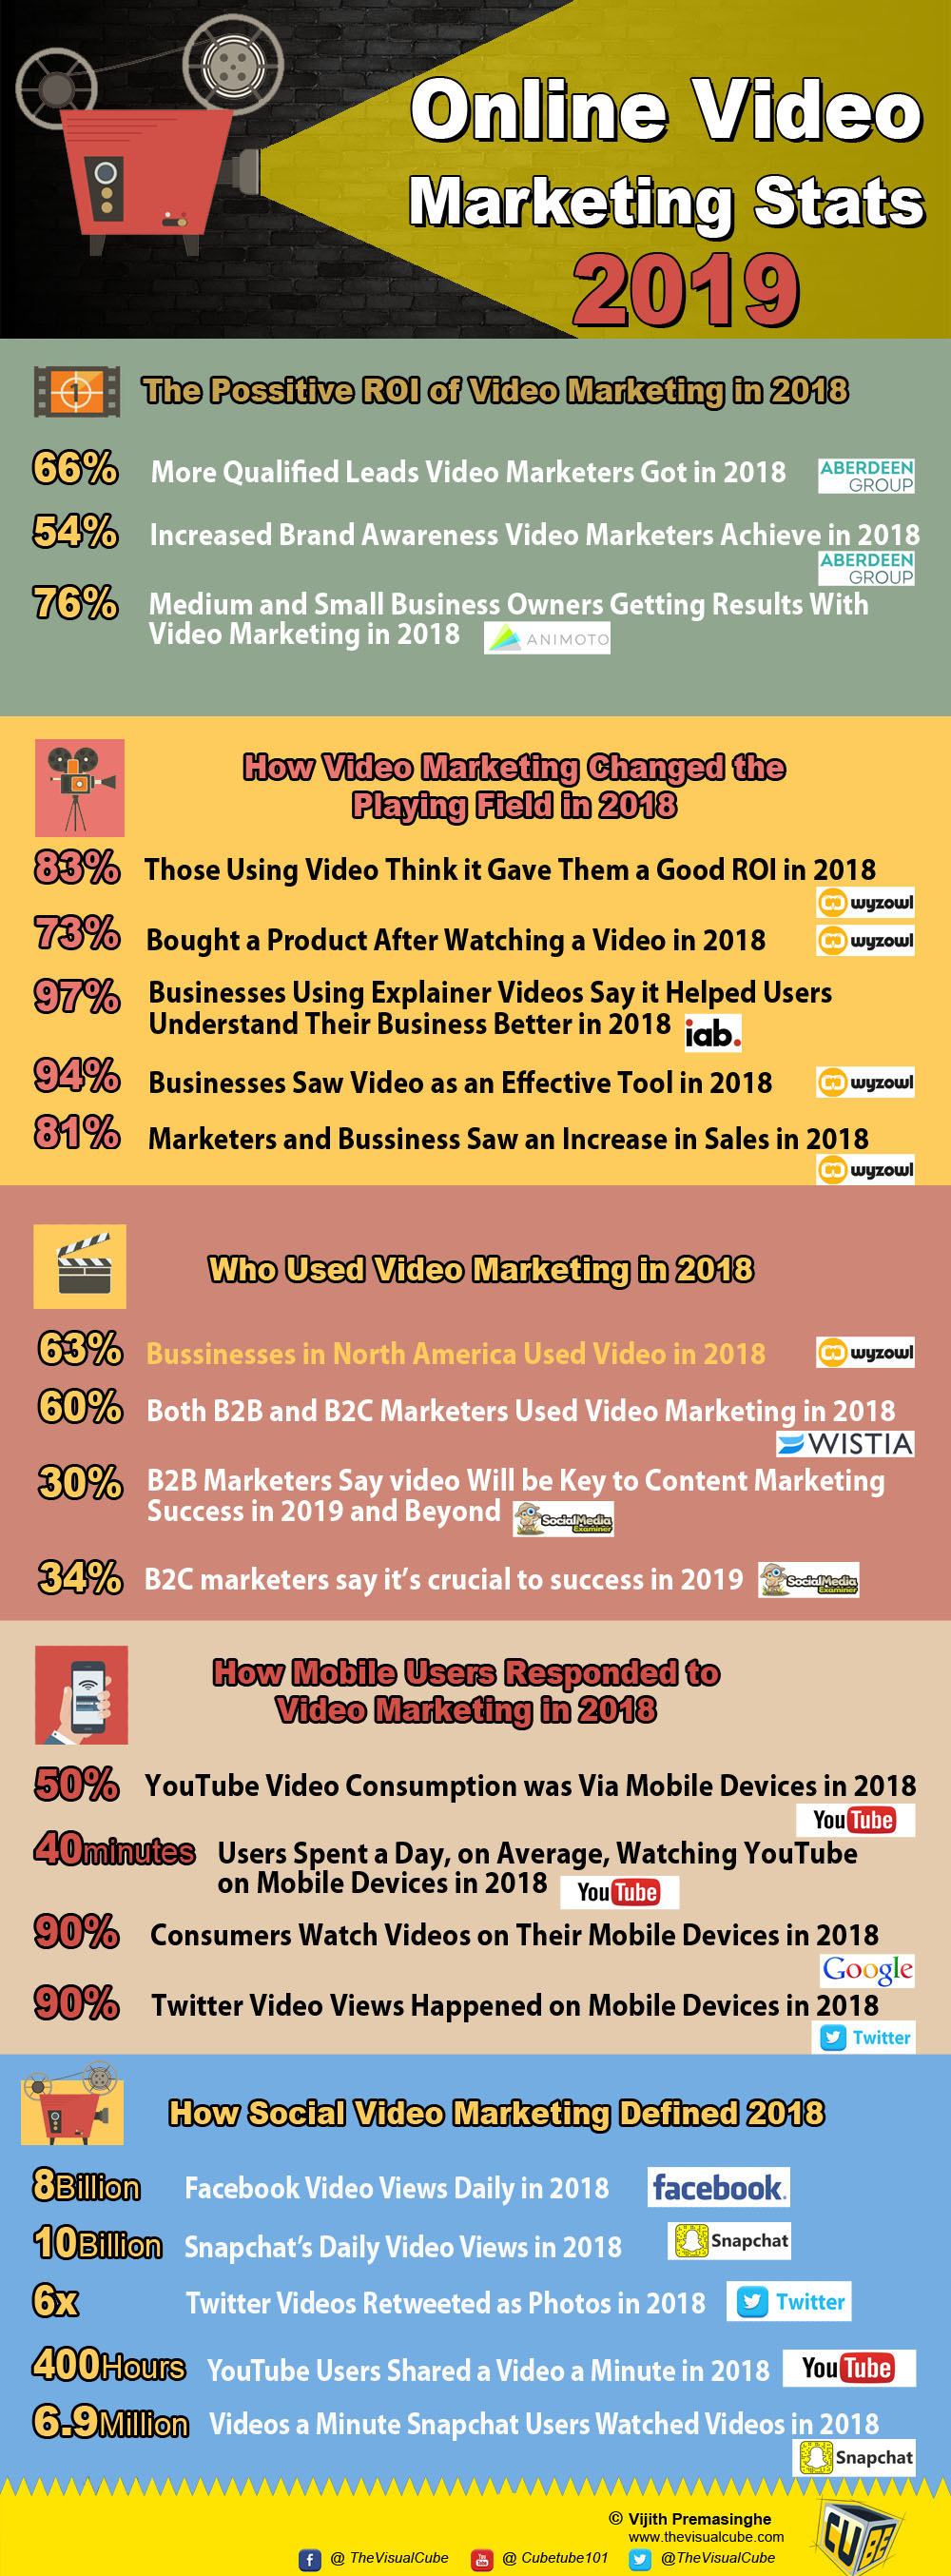 Brand Marketing Video Sri Lanka 2020